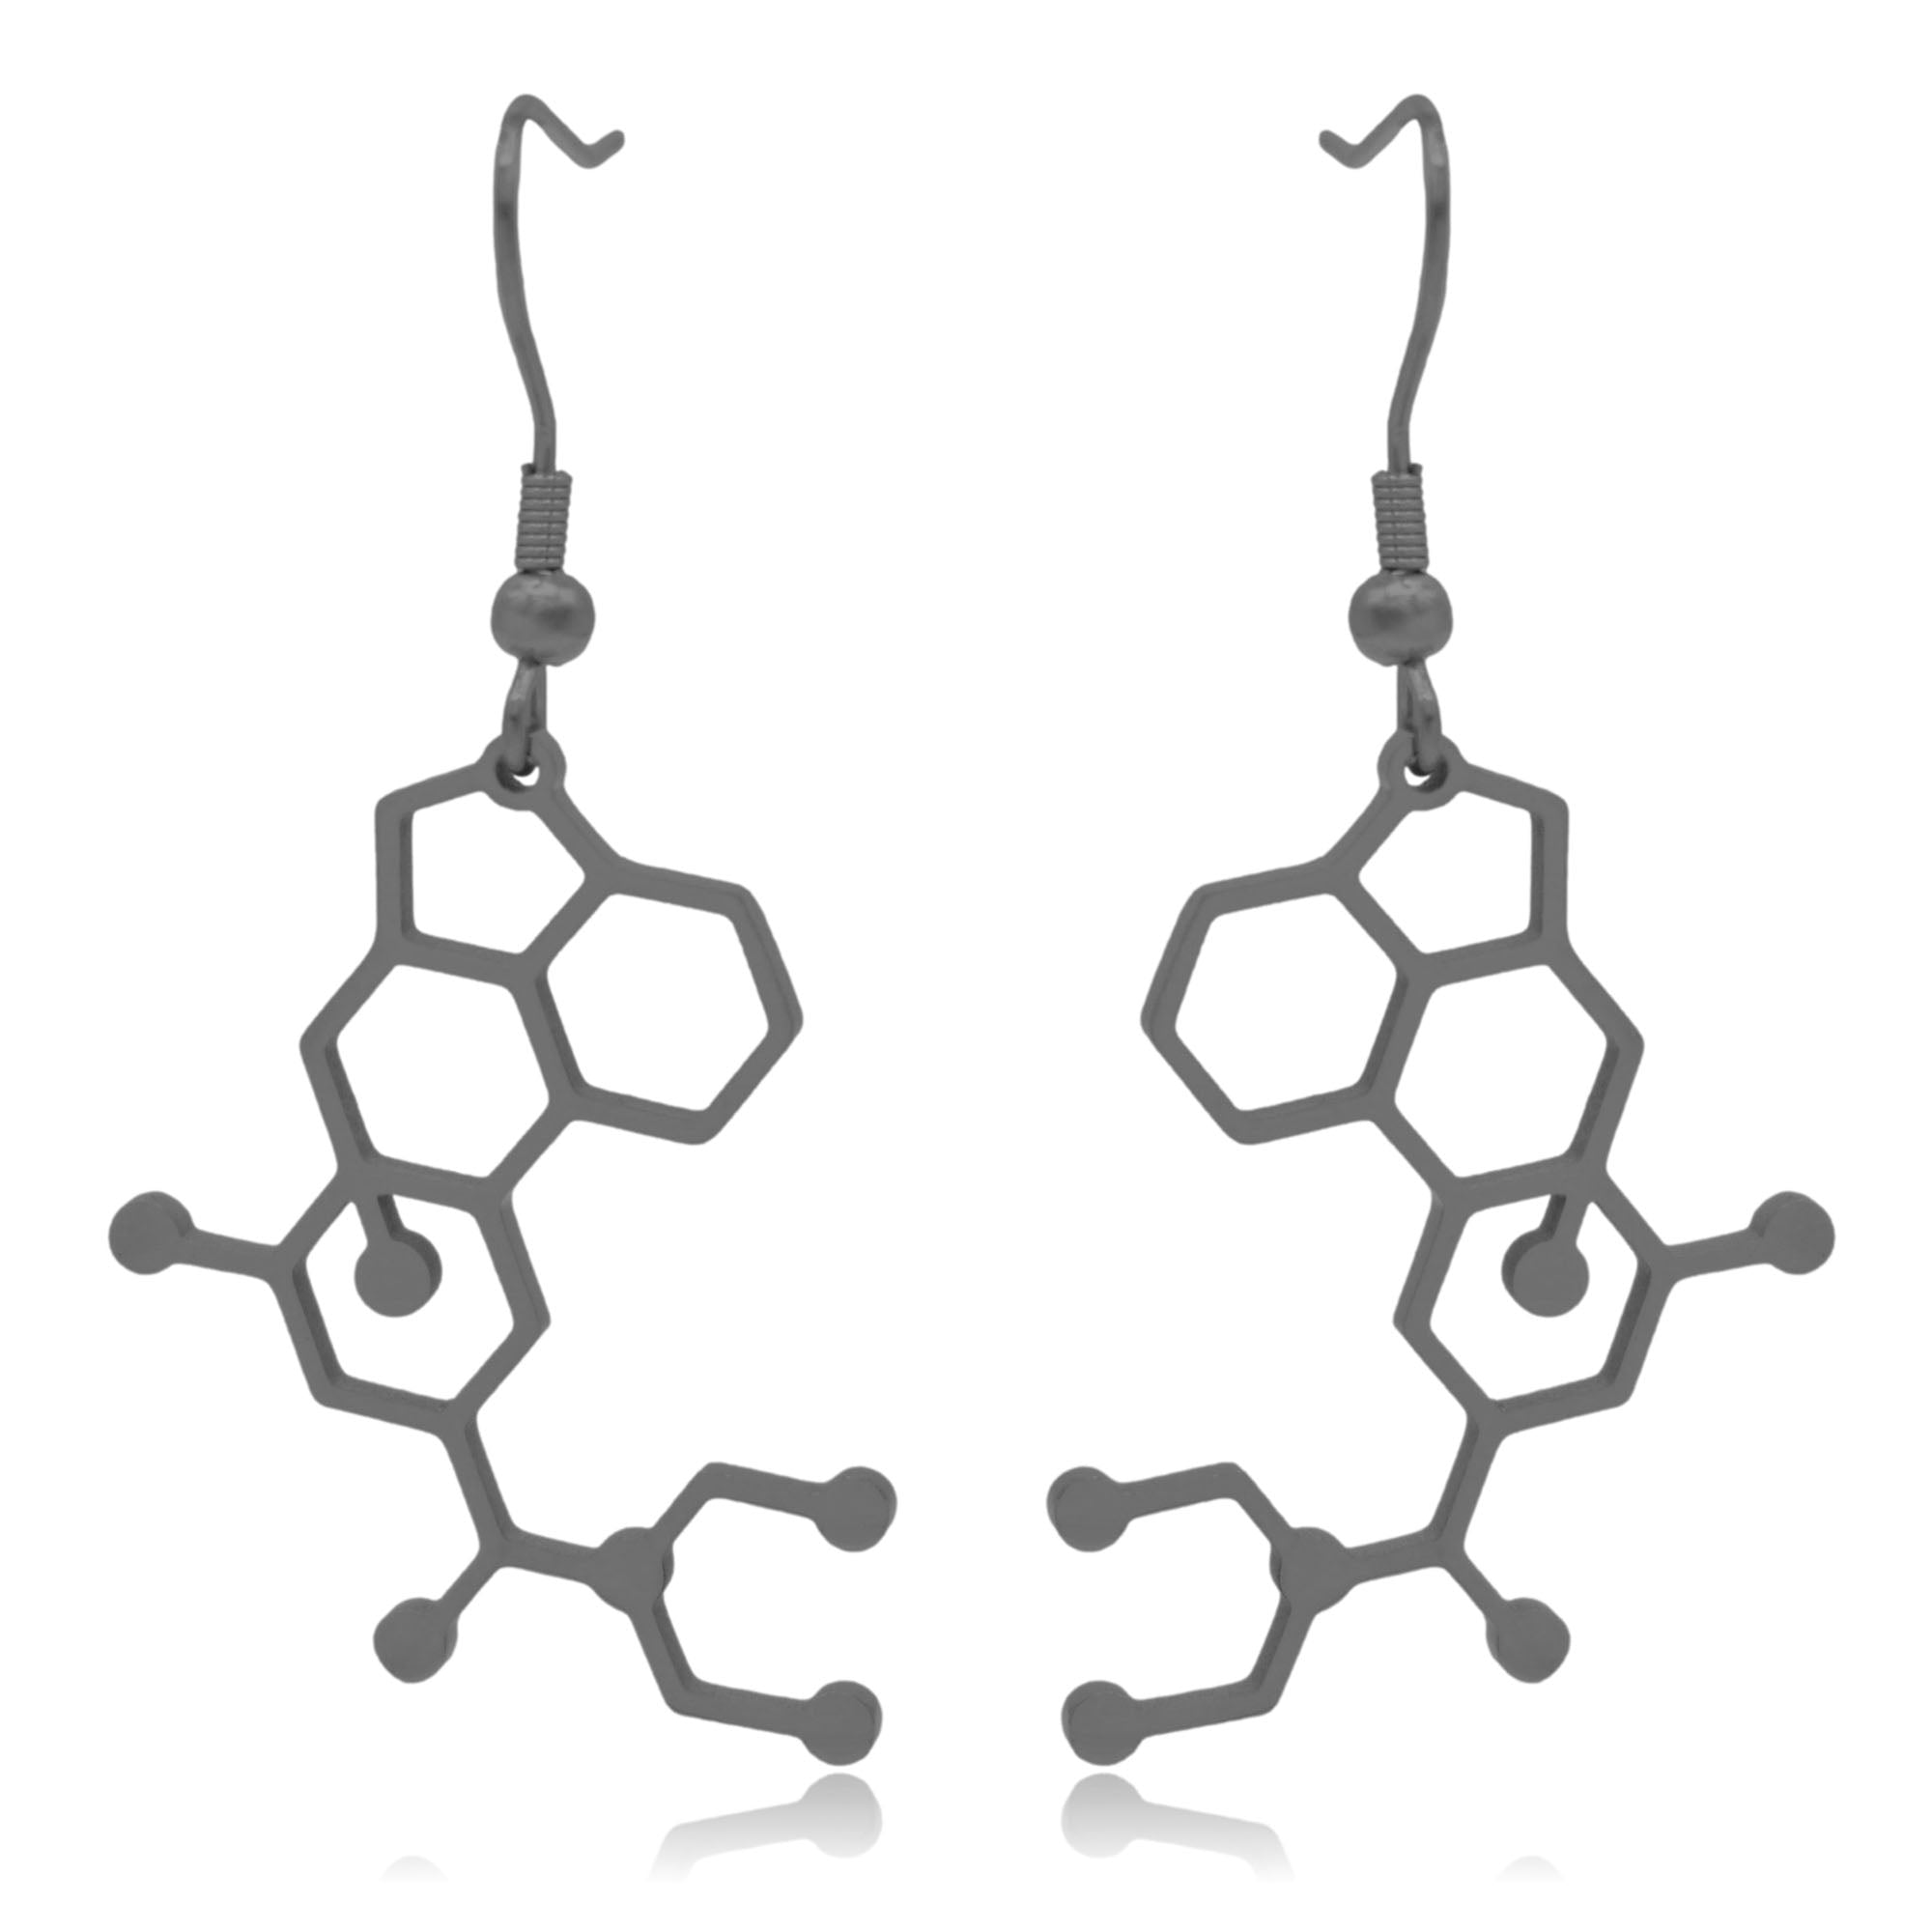 LSD Lysergic Acid Diethylamide Molecule Stainless Steel Dangle Earrings